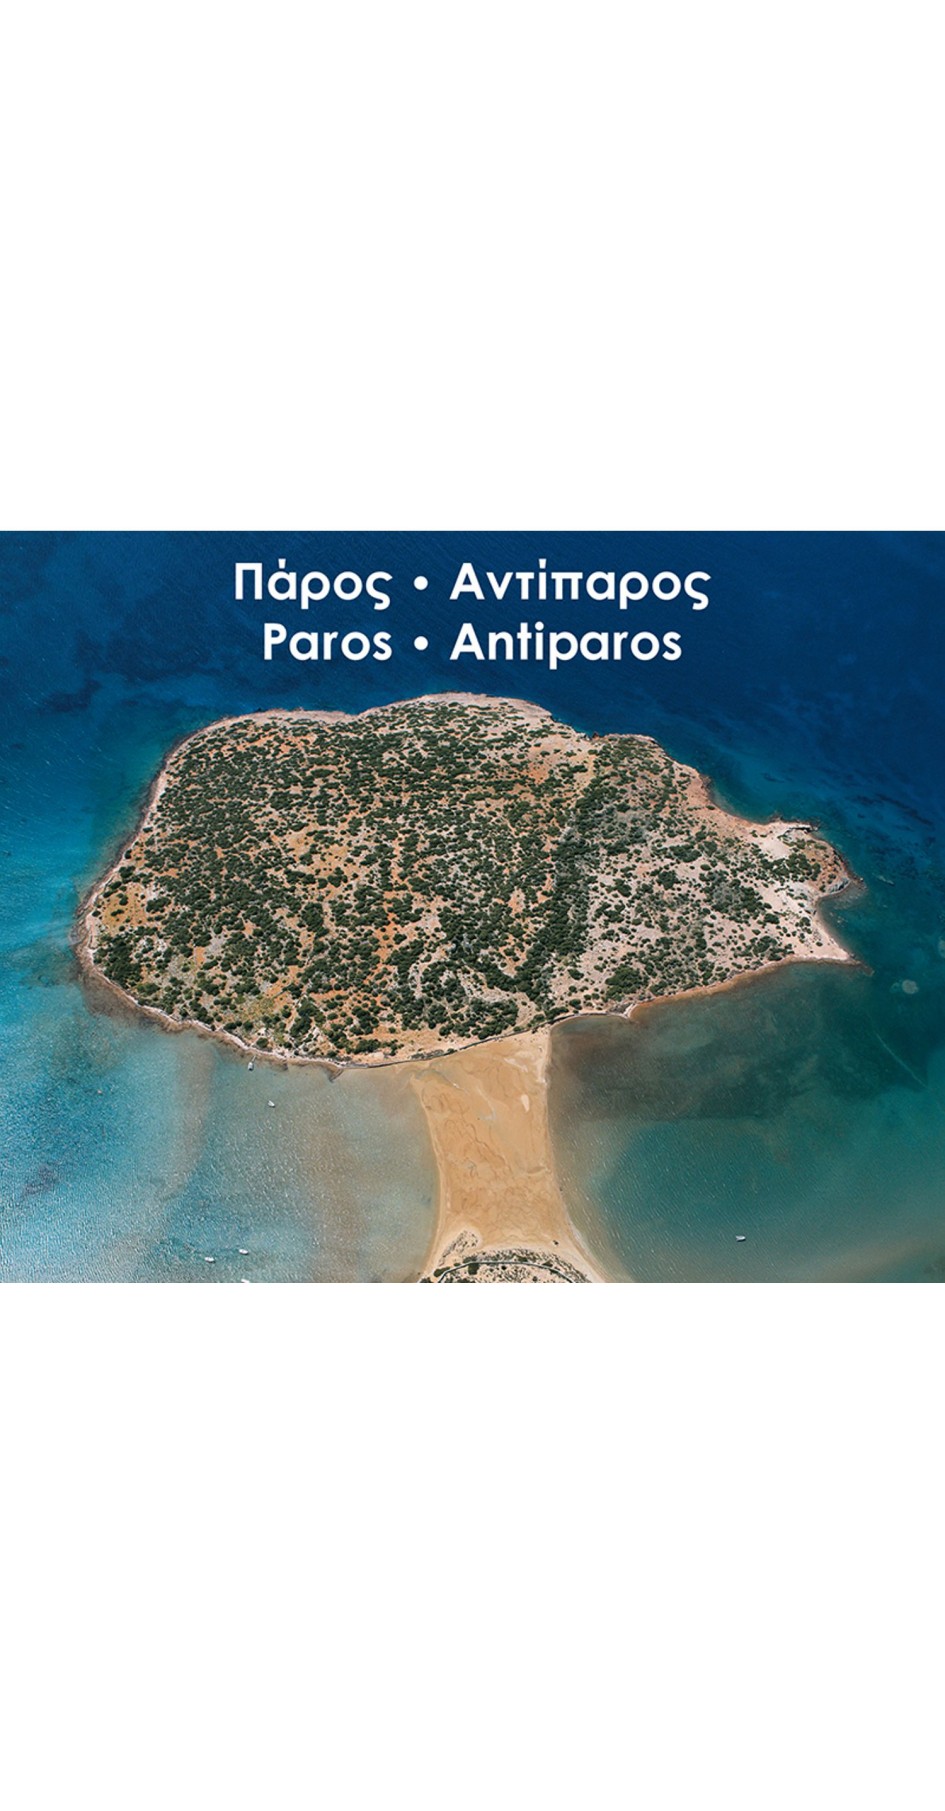 Paros - Antiparos: as the seagul flies